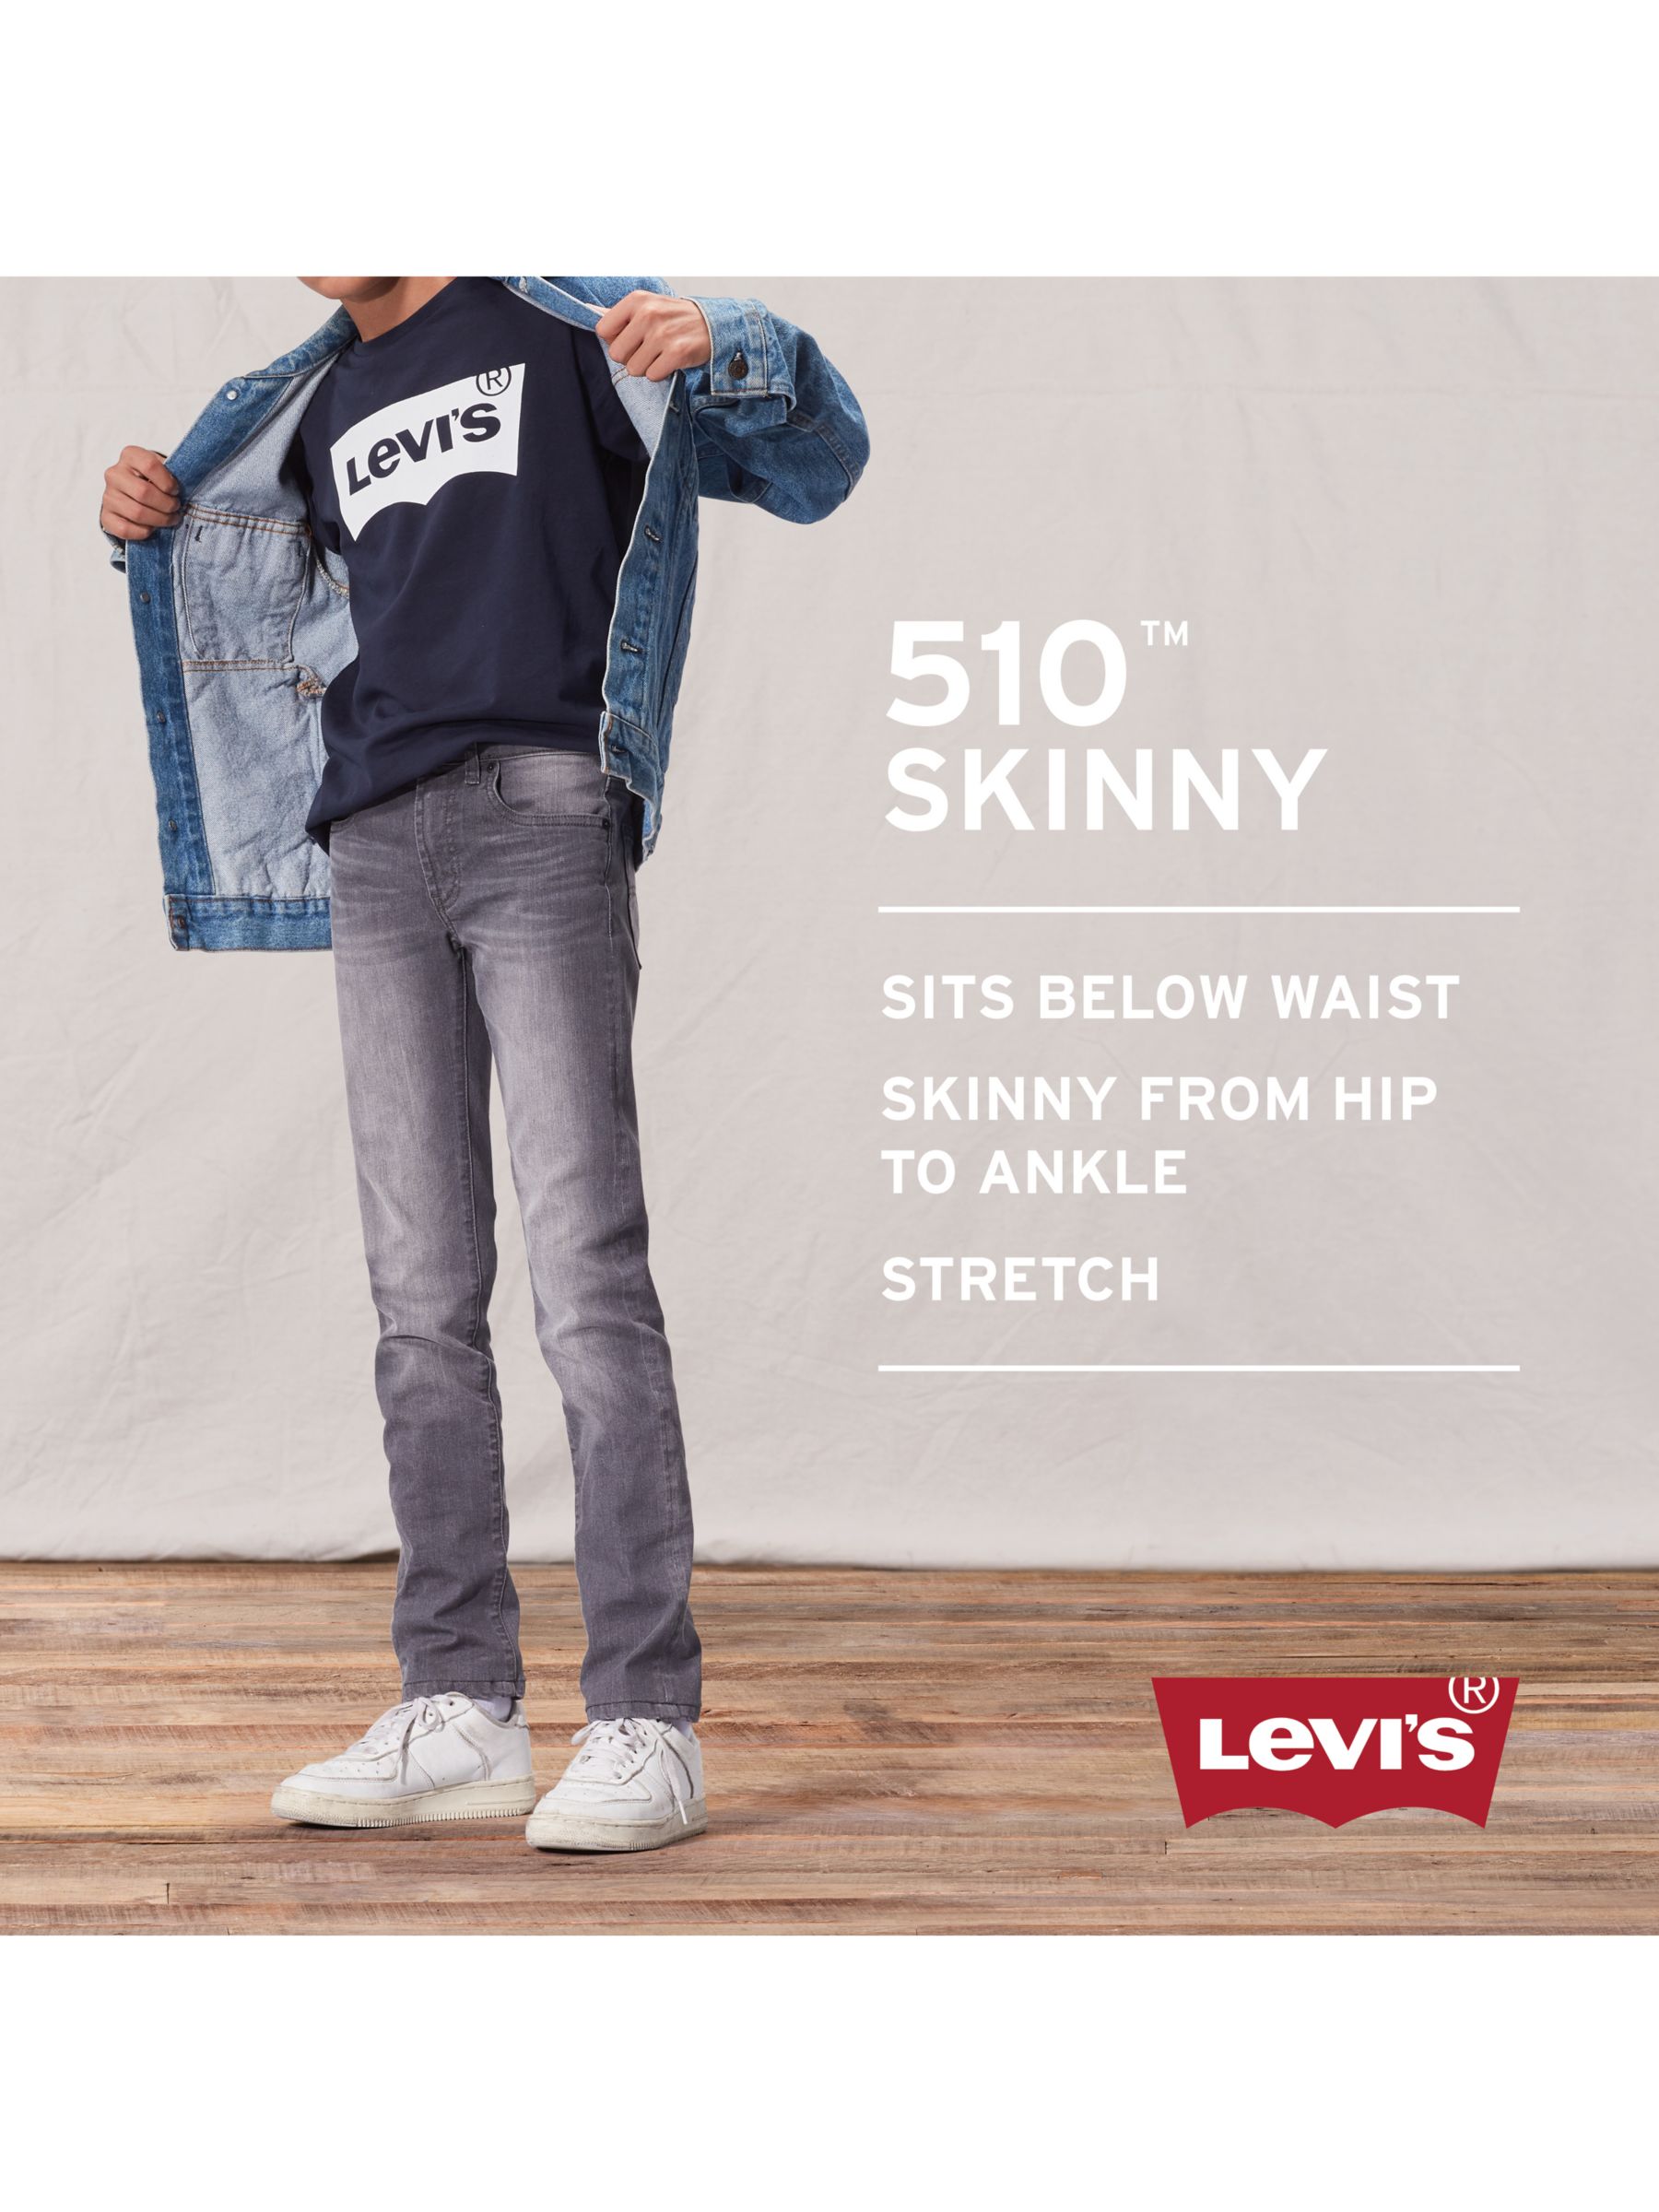 Makkelijk in de omgang Nodig hebben Sobriquette Levi's Boys' 510 Skinny Fit Jeans, Dark Blue at John Lewis & Partners